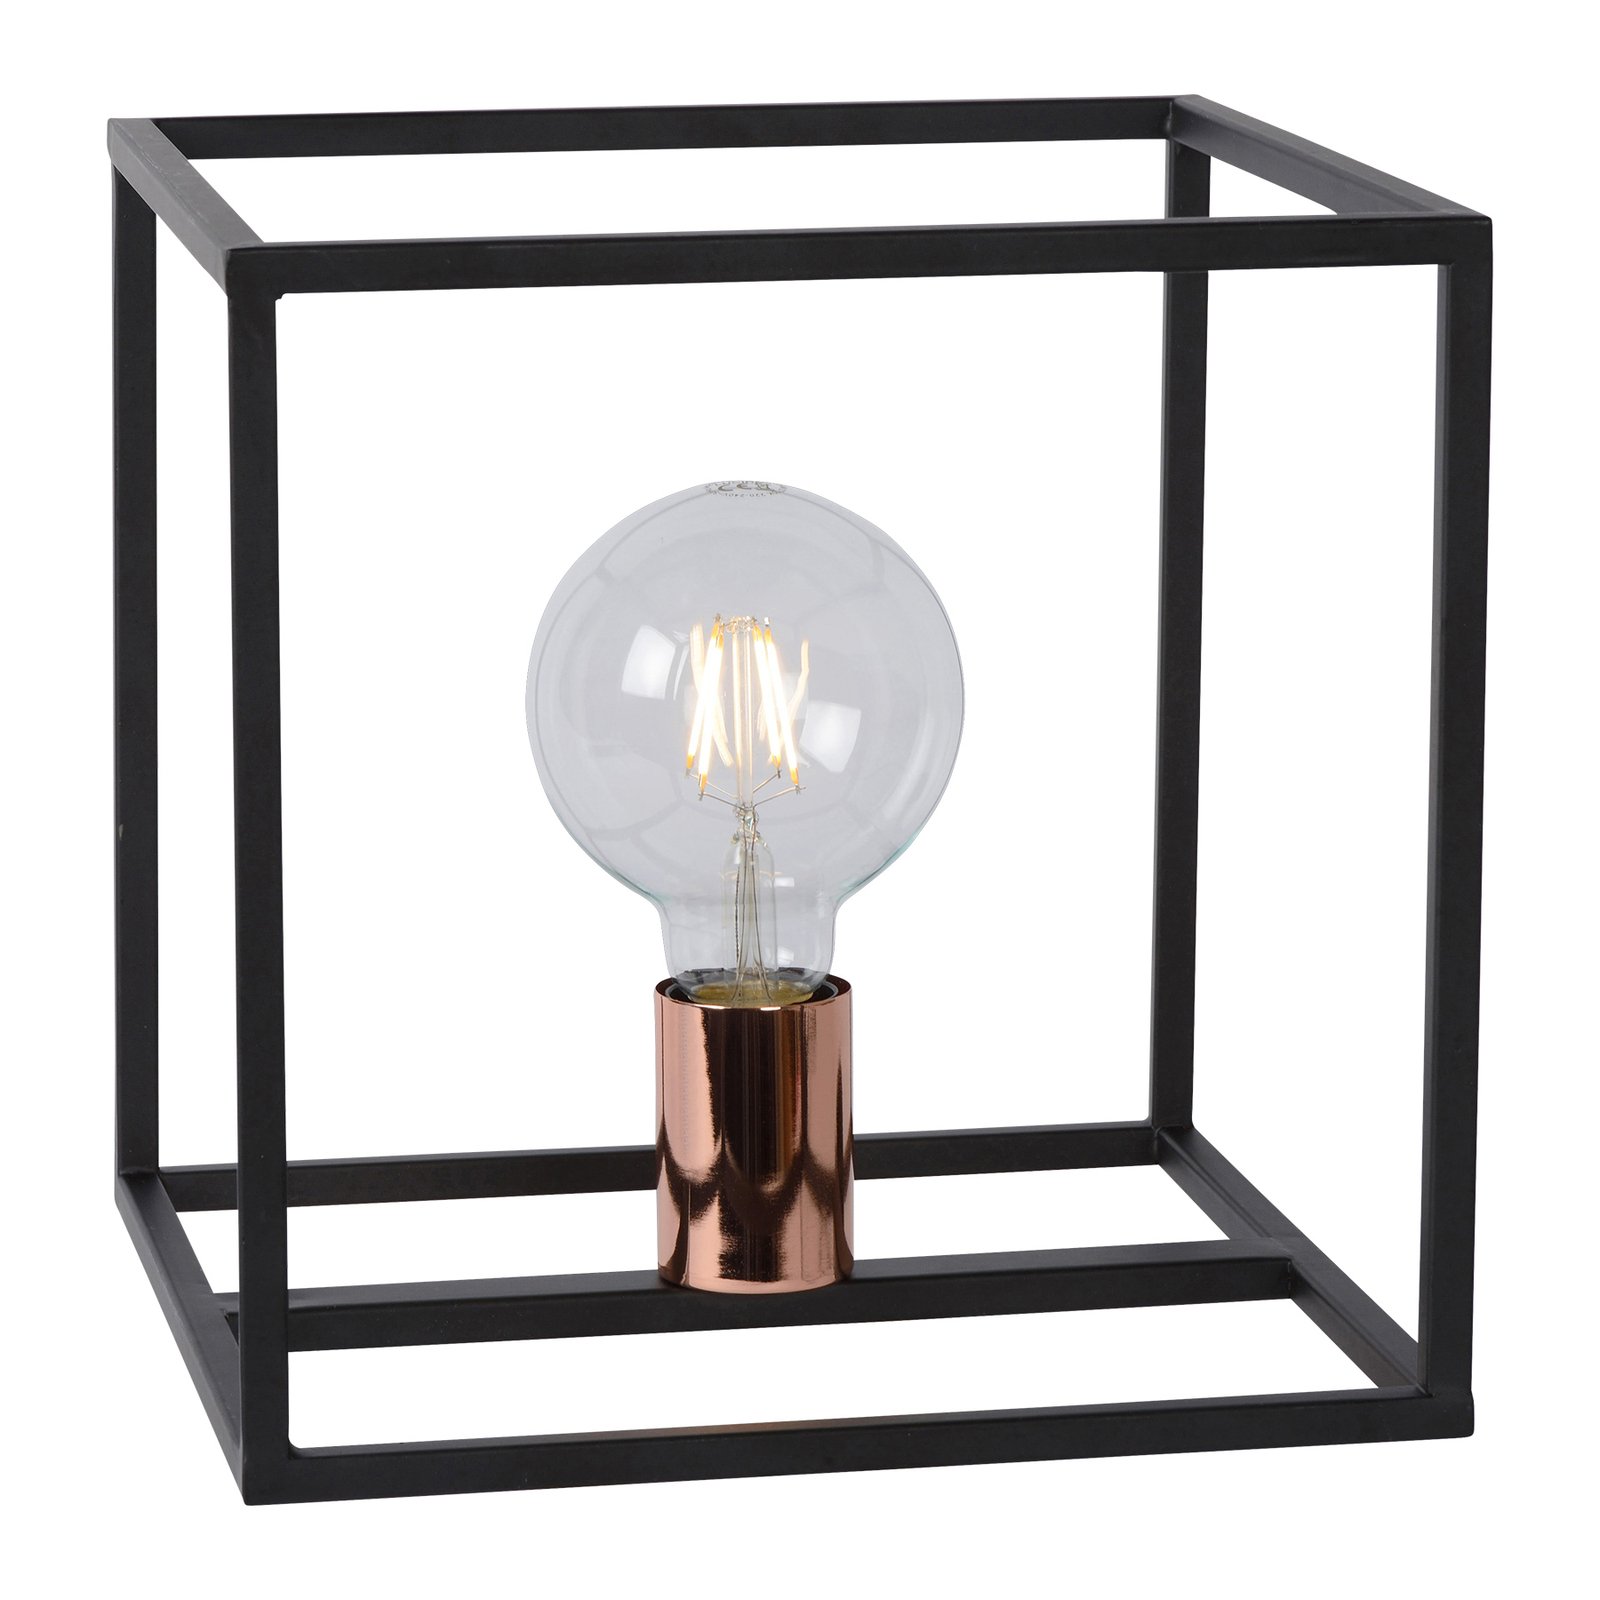 Arthur table lamp with metal frame, black